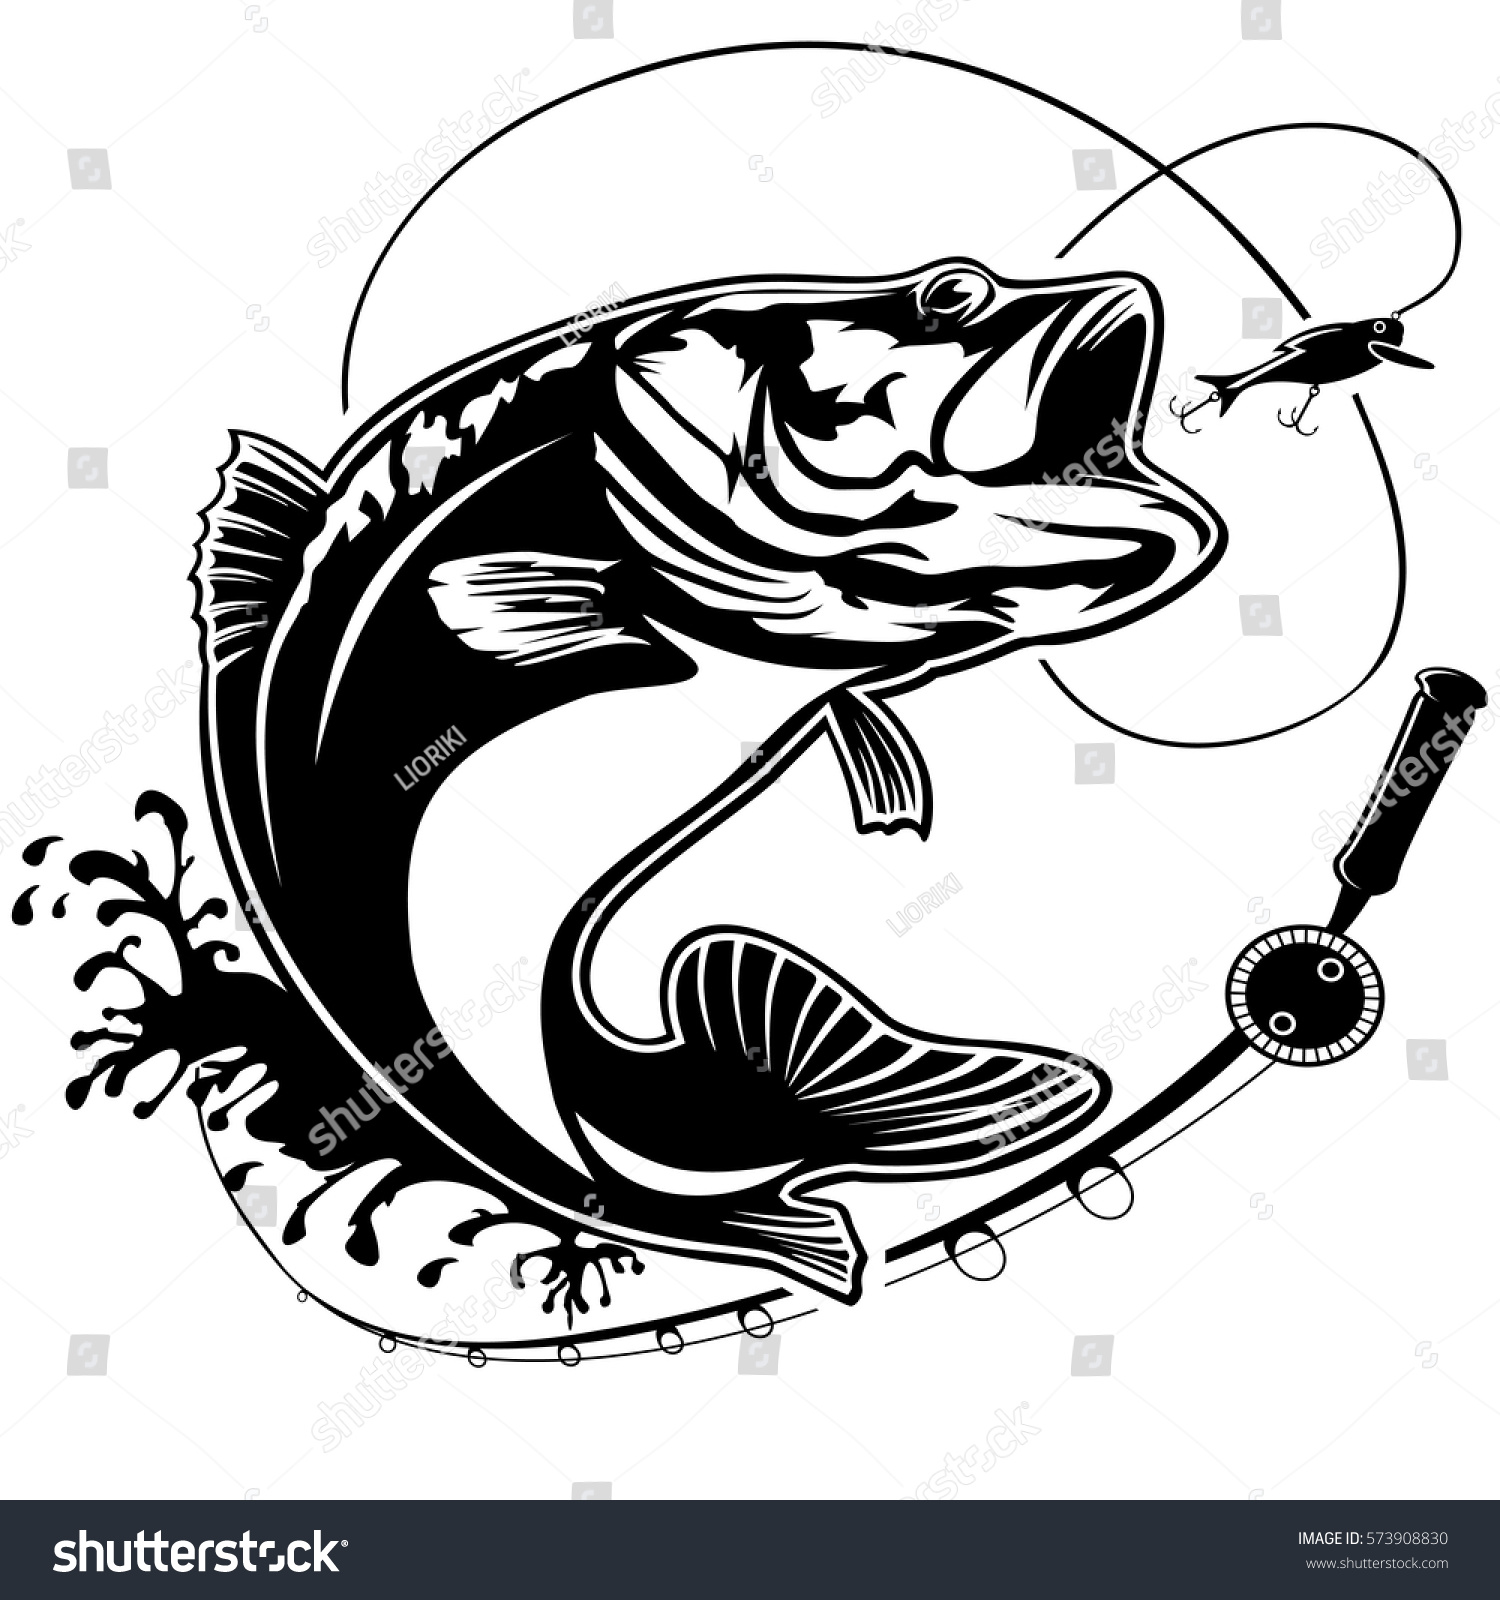 Download Fishing Logo Bass Fish Club Emblem Stock Vector 573908830 - Shutterstock